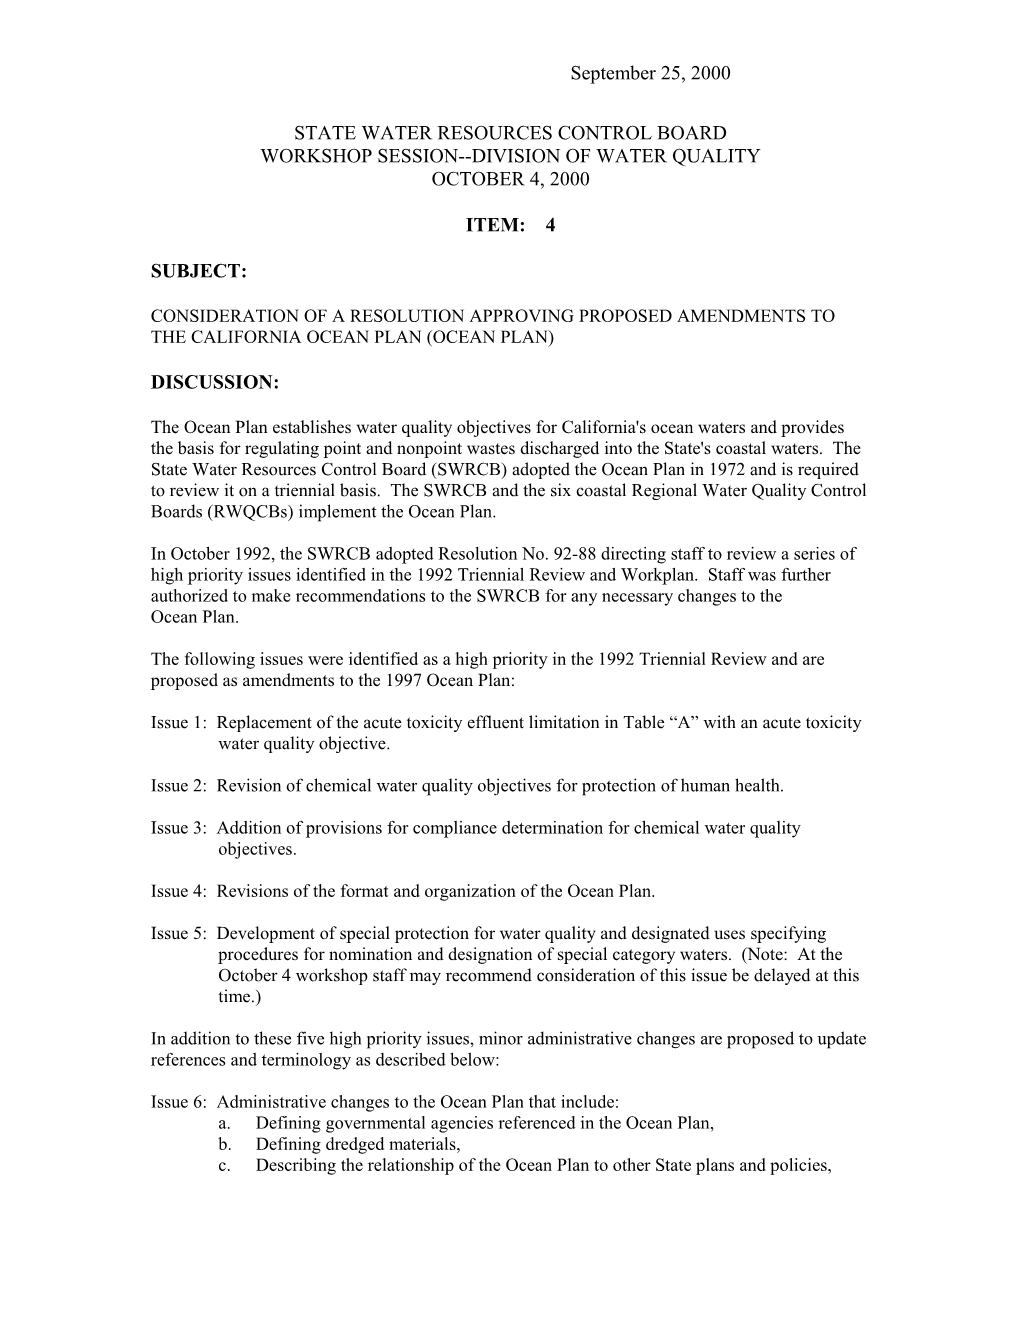 Amendments to the 1997 Ocean Plan